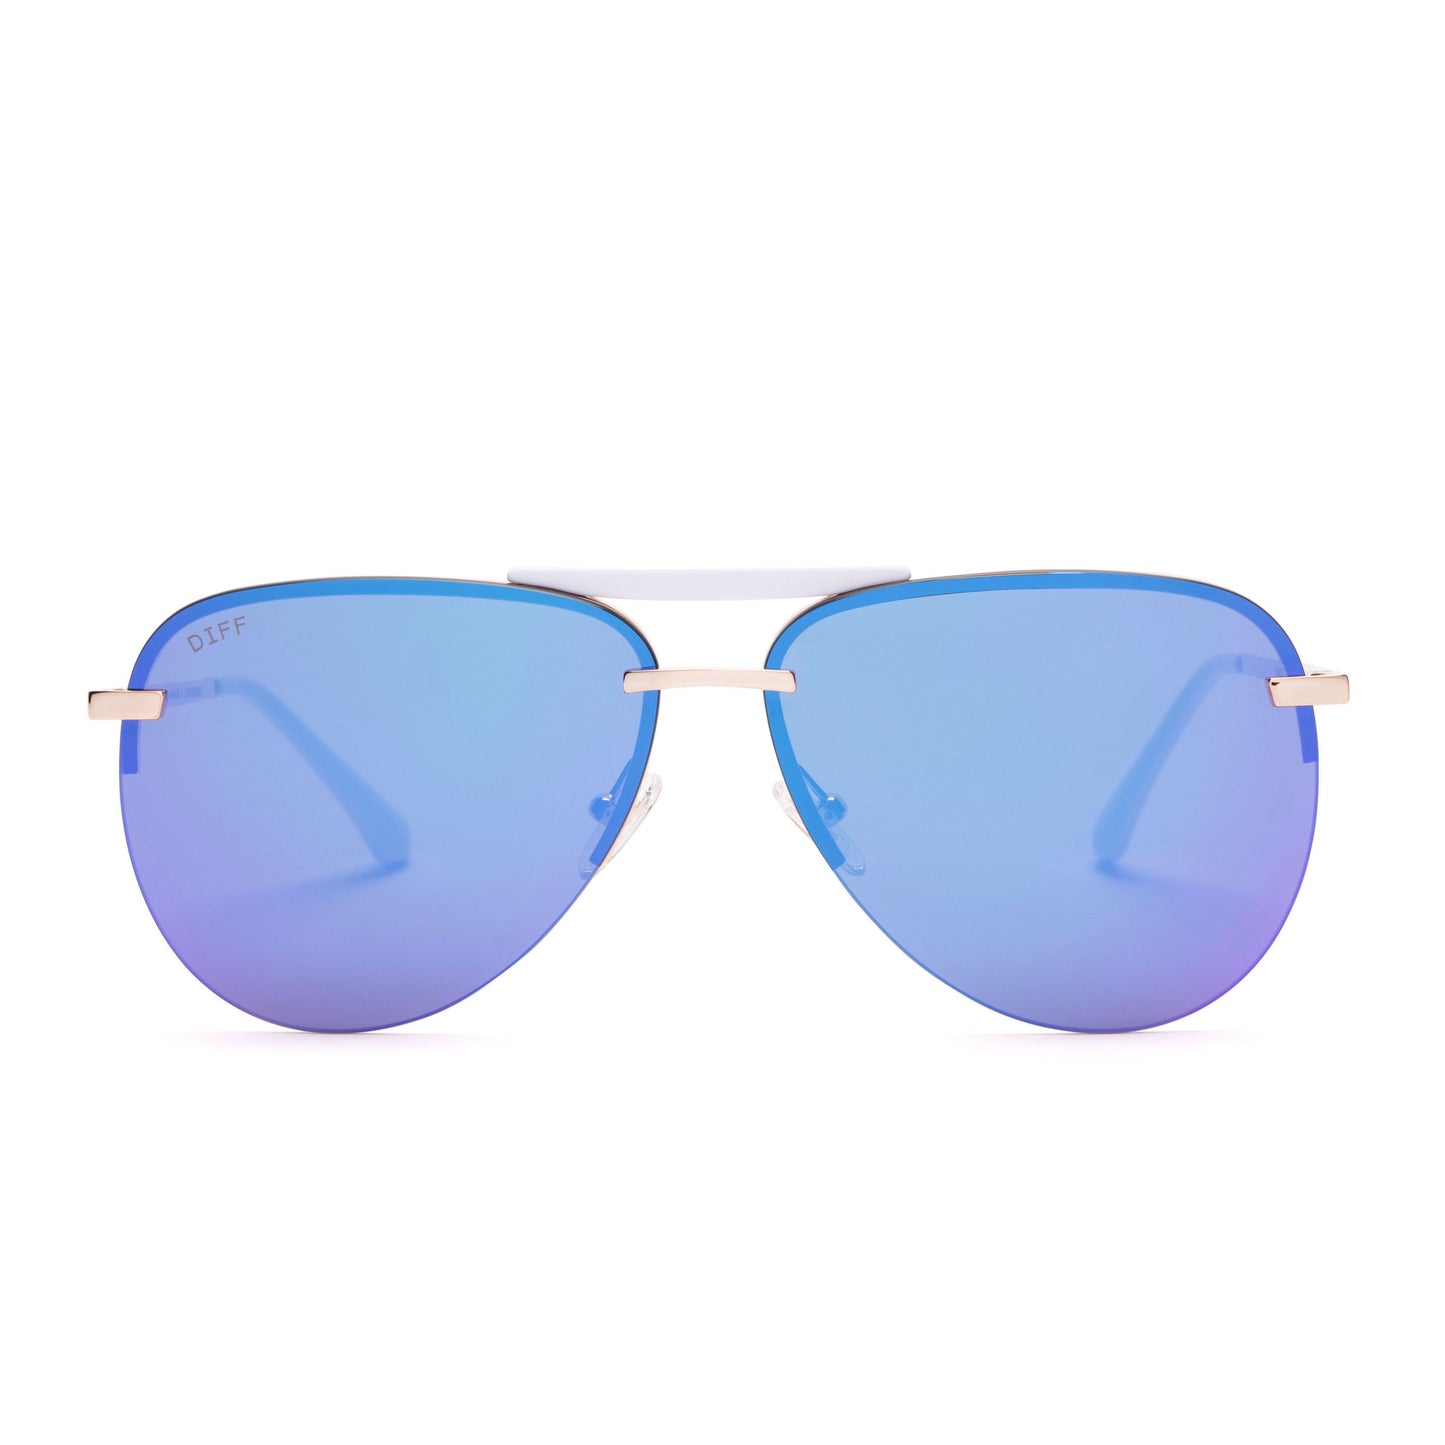 Tahoe Gold + Purple Mirror Sunglasses